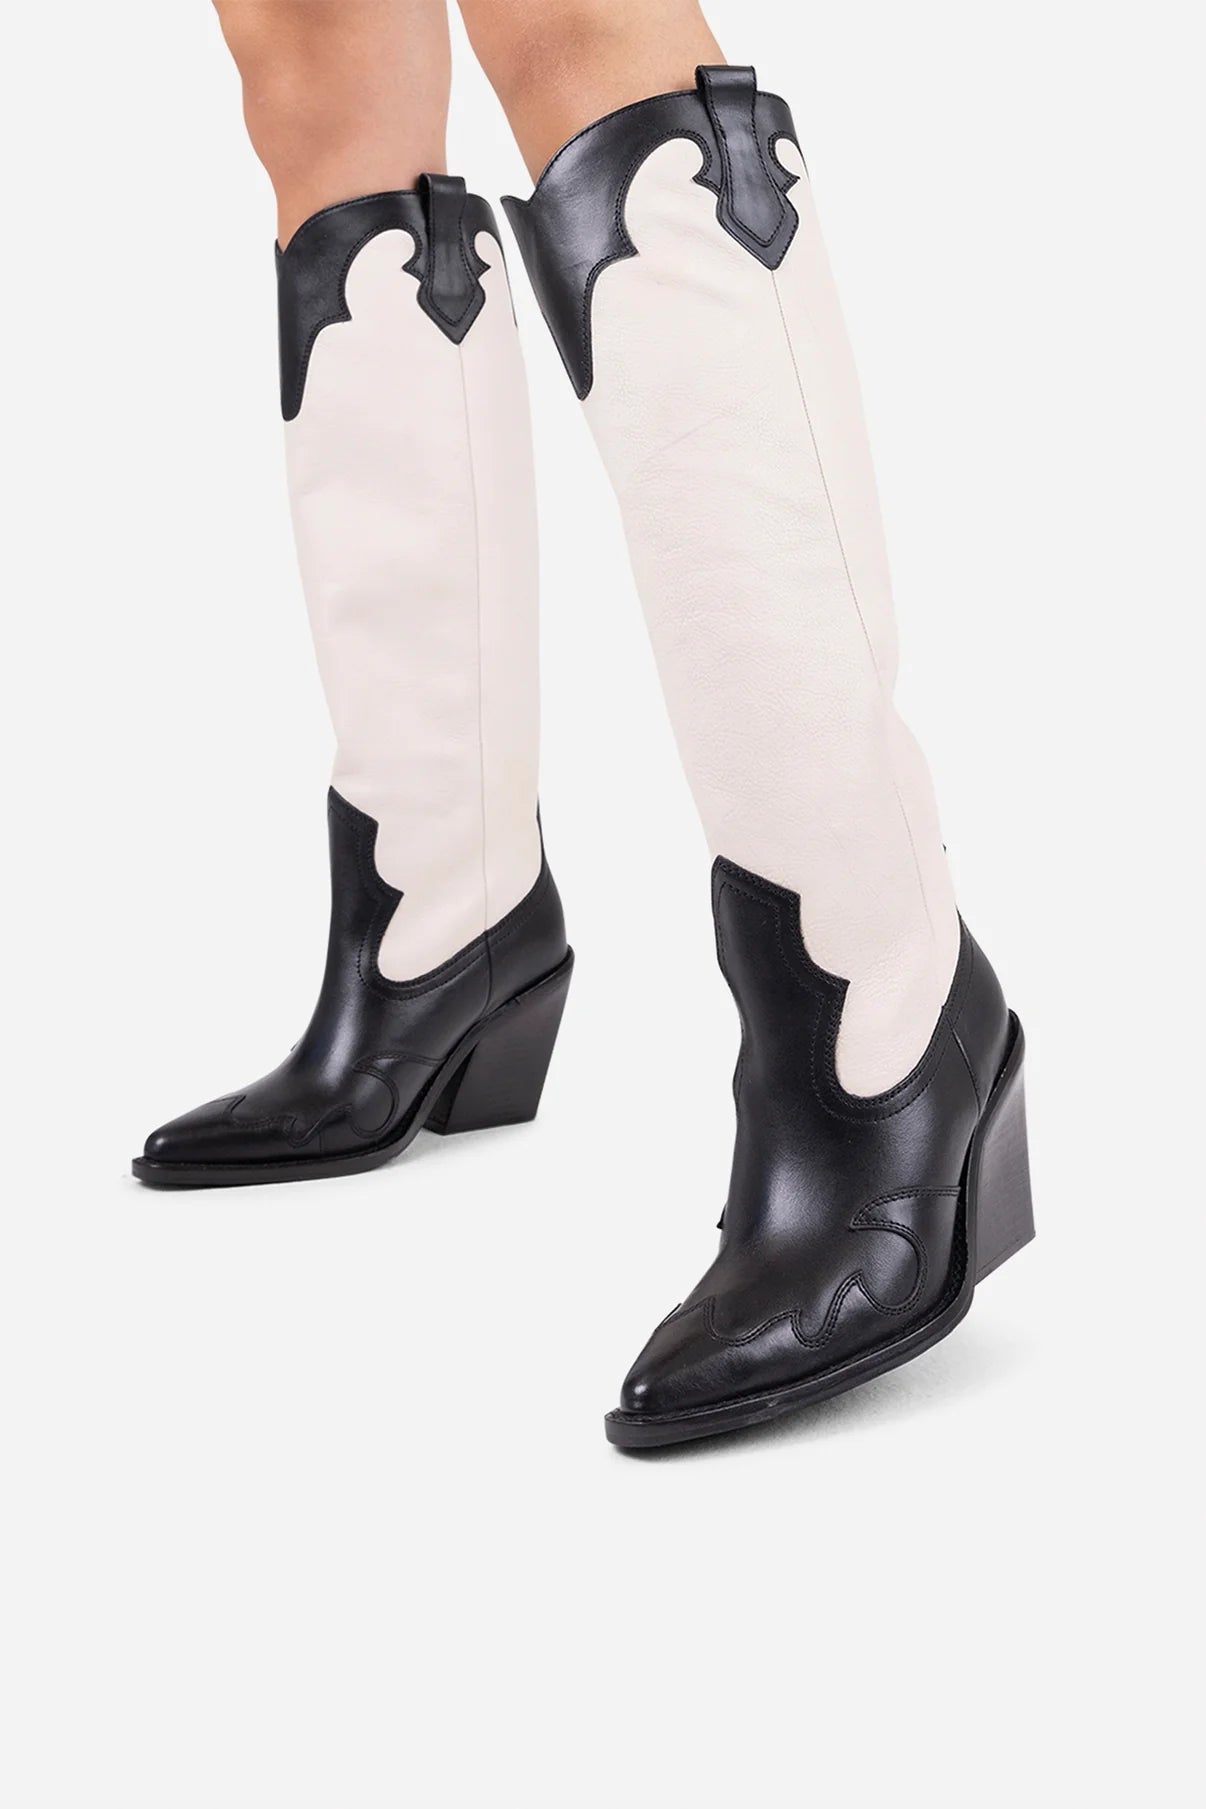 New Kole boots - black/off white